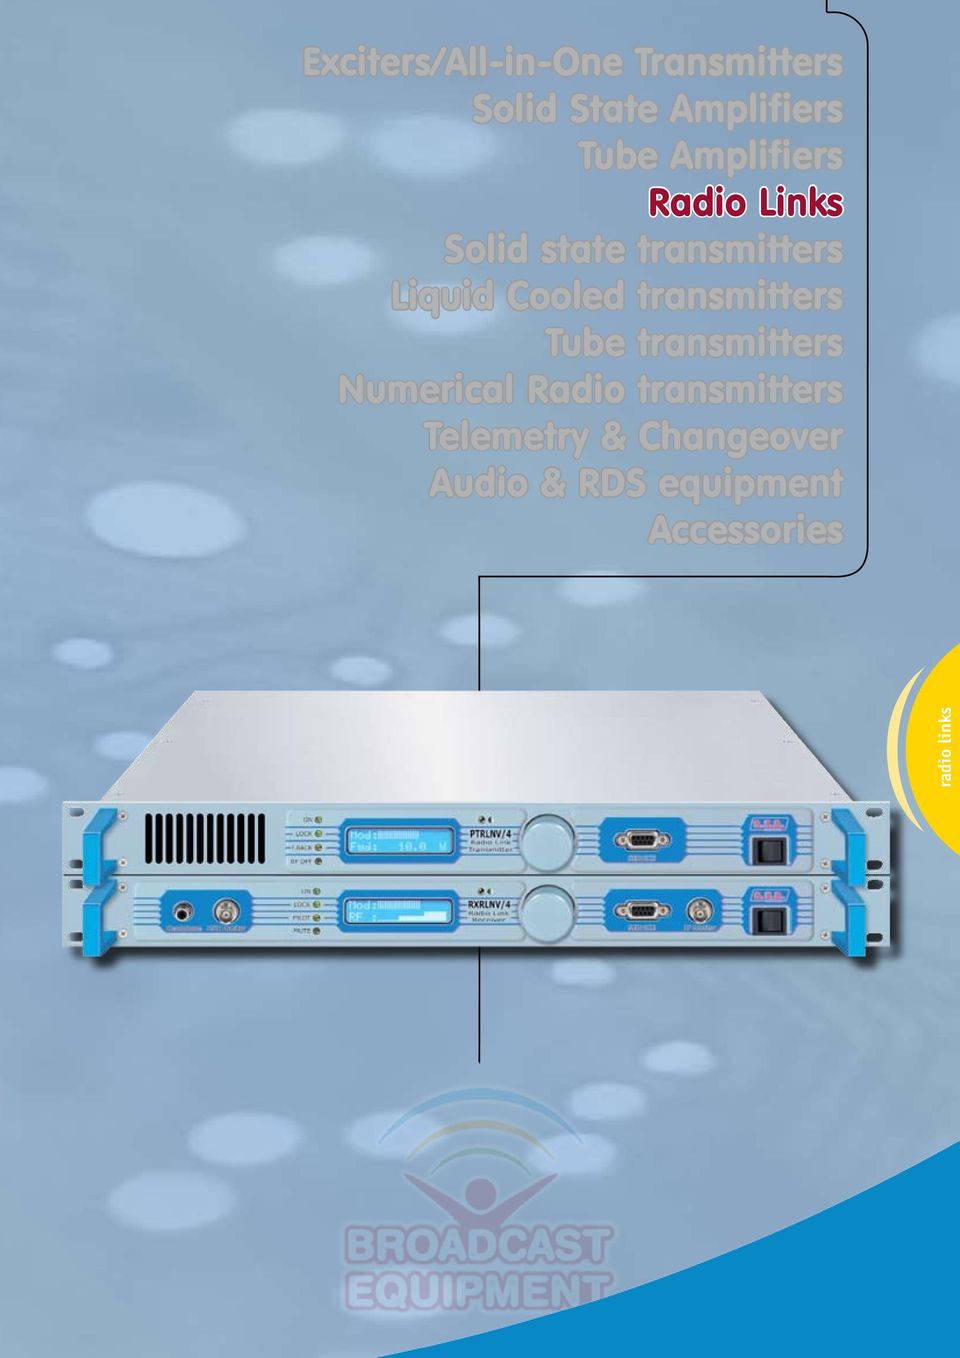 transmitters Tube transmitters Numerical Radio transmitters